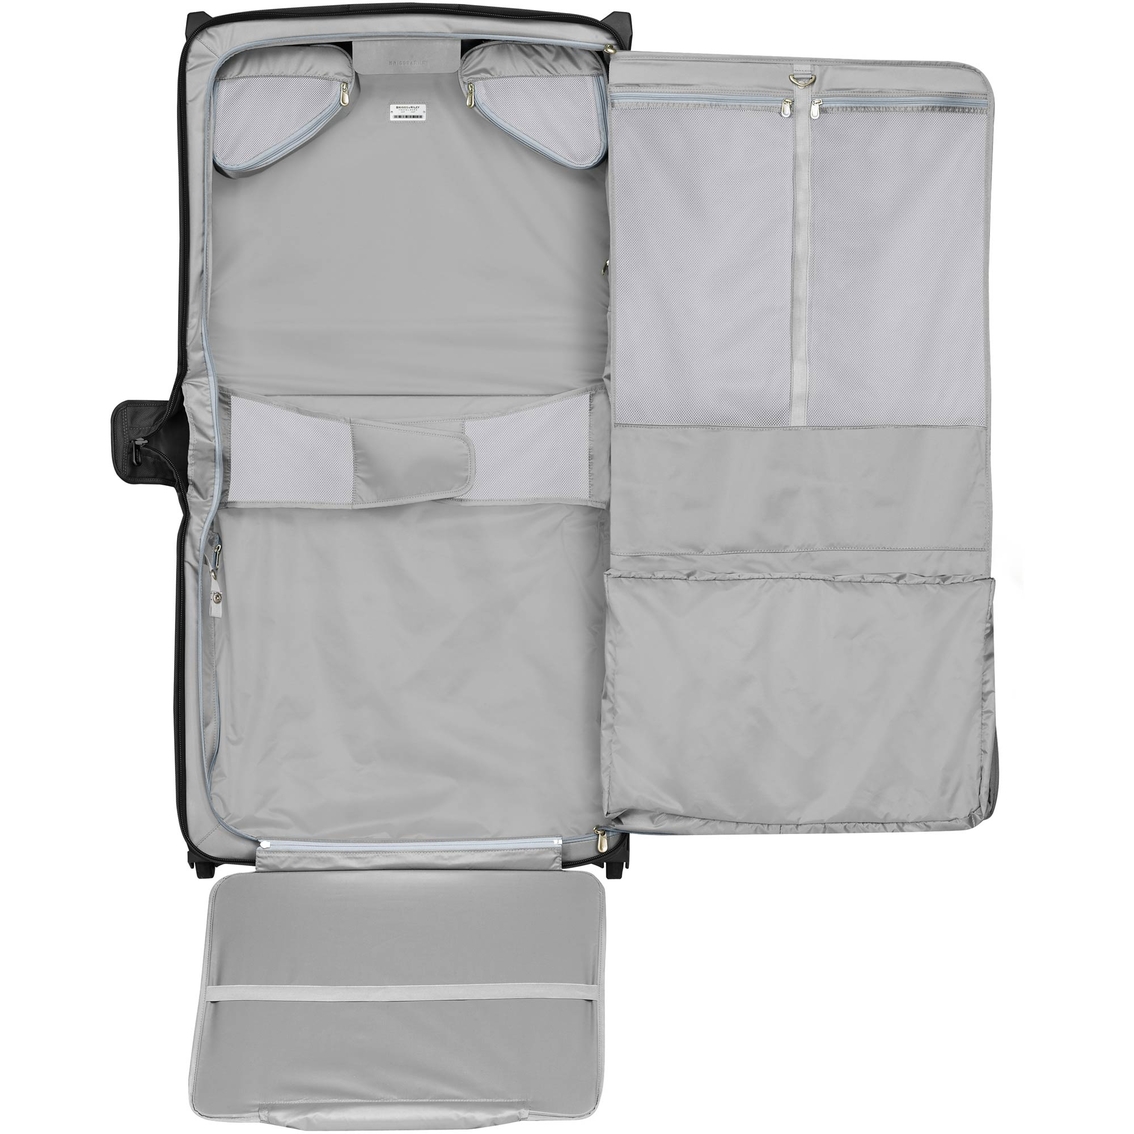 Briggs & Riley Baseline Deluxe Wheeled Garment Bag - Image 2 of 2